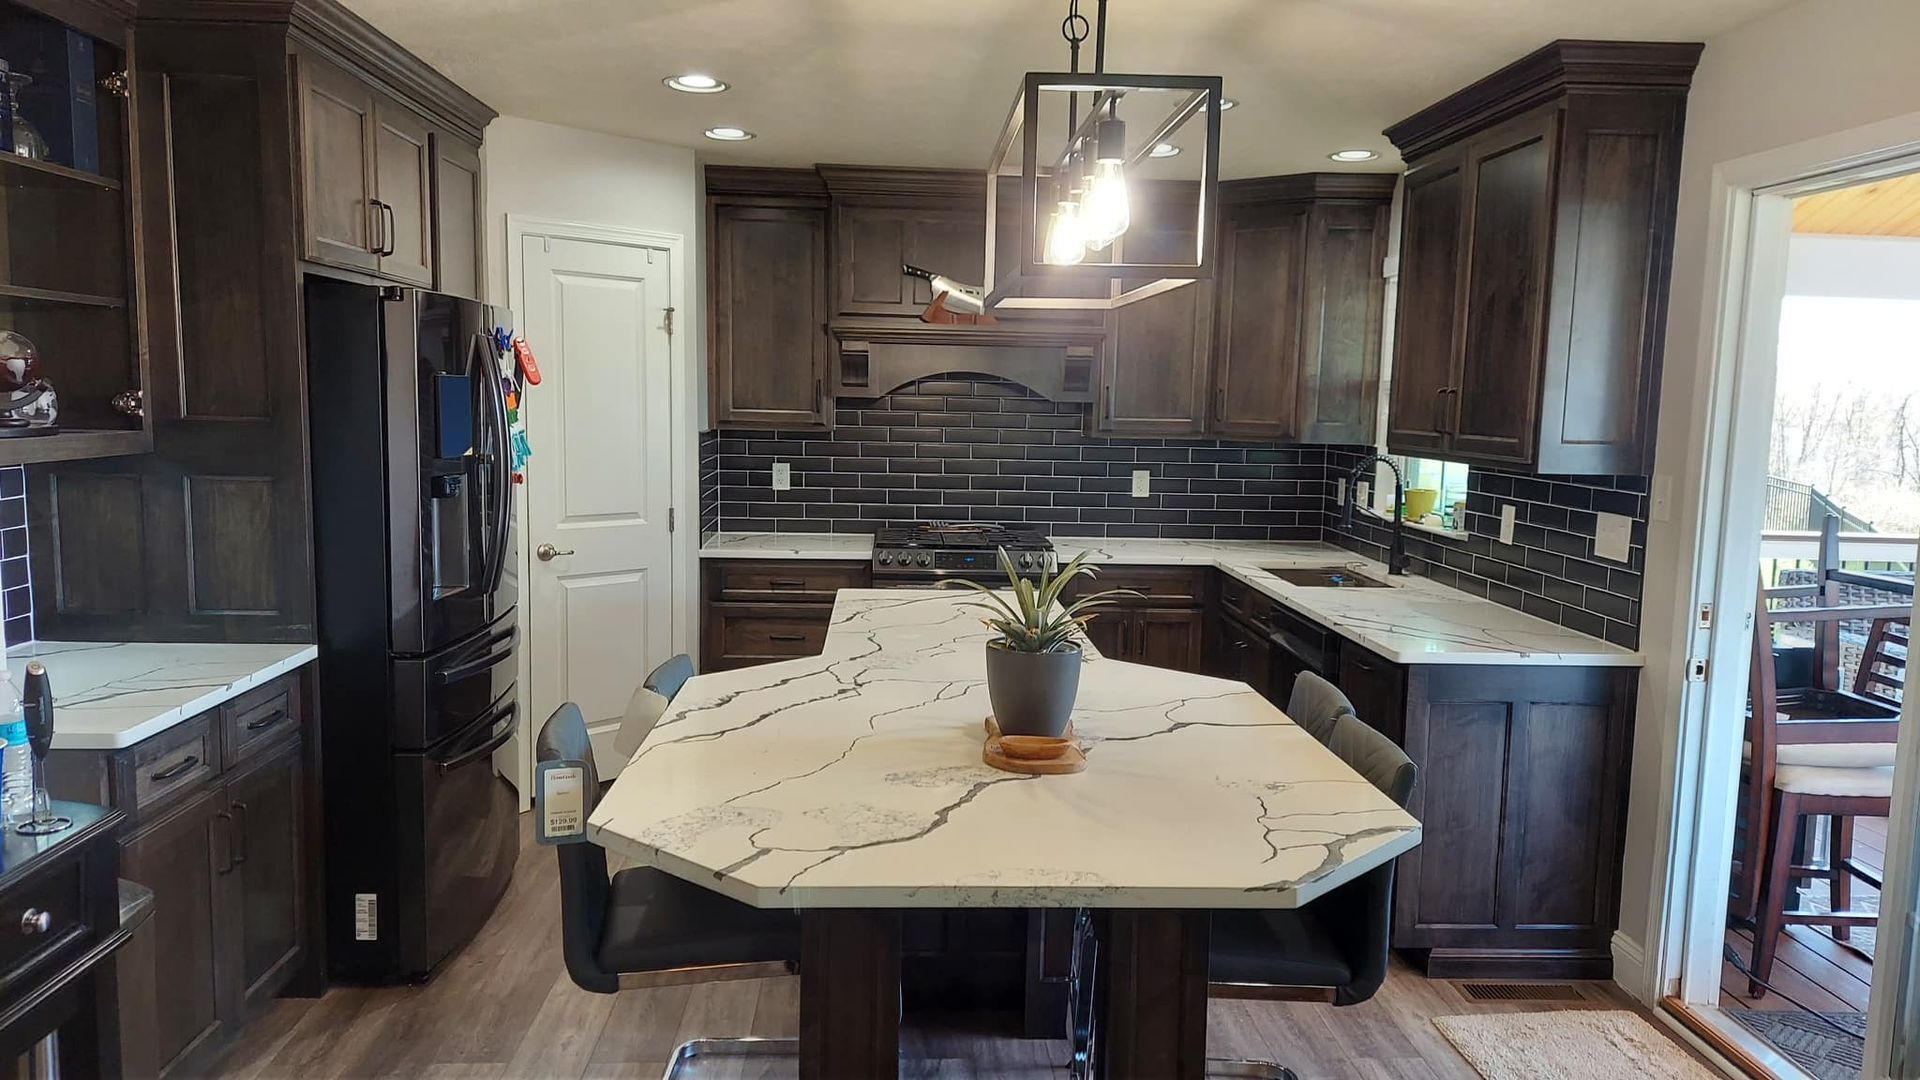 kitchen remode with vinyl plank floor, granite countertops, unique shaped island. Backsplash and dark cabinets